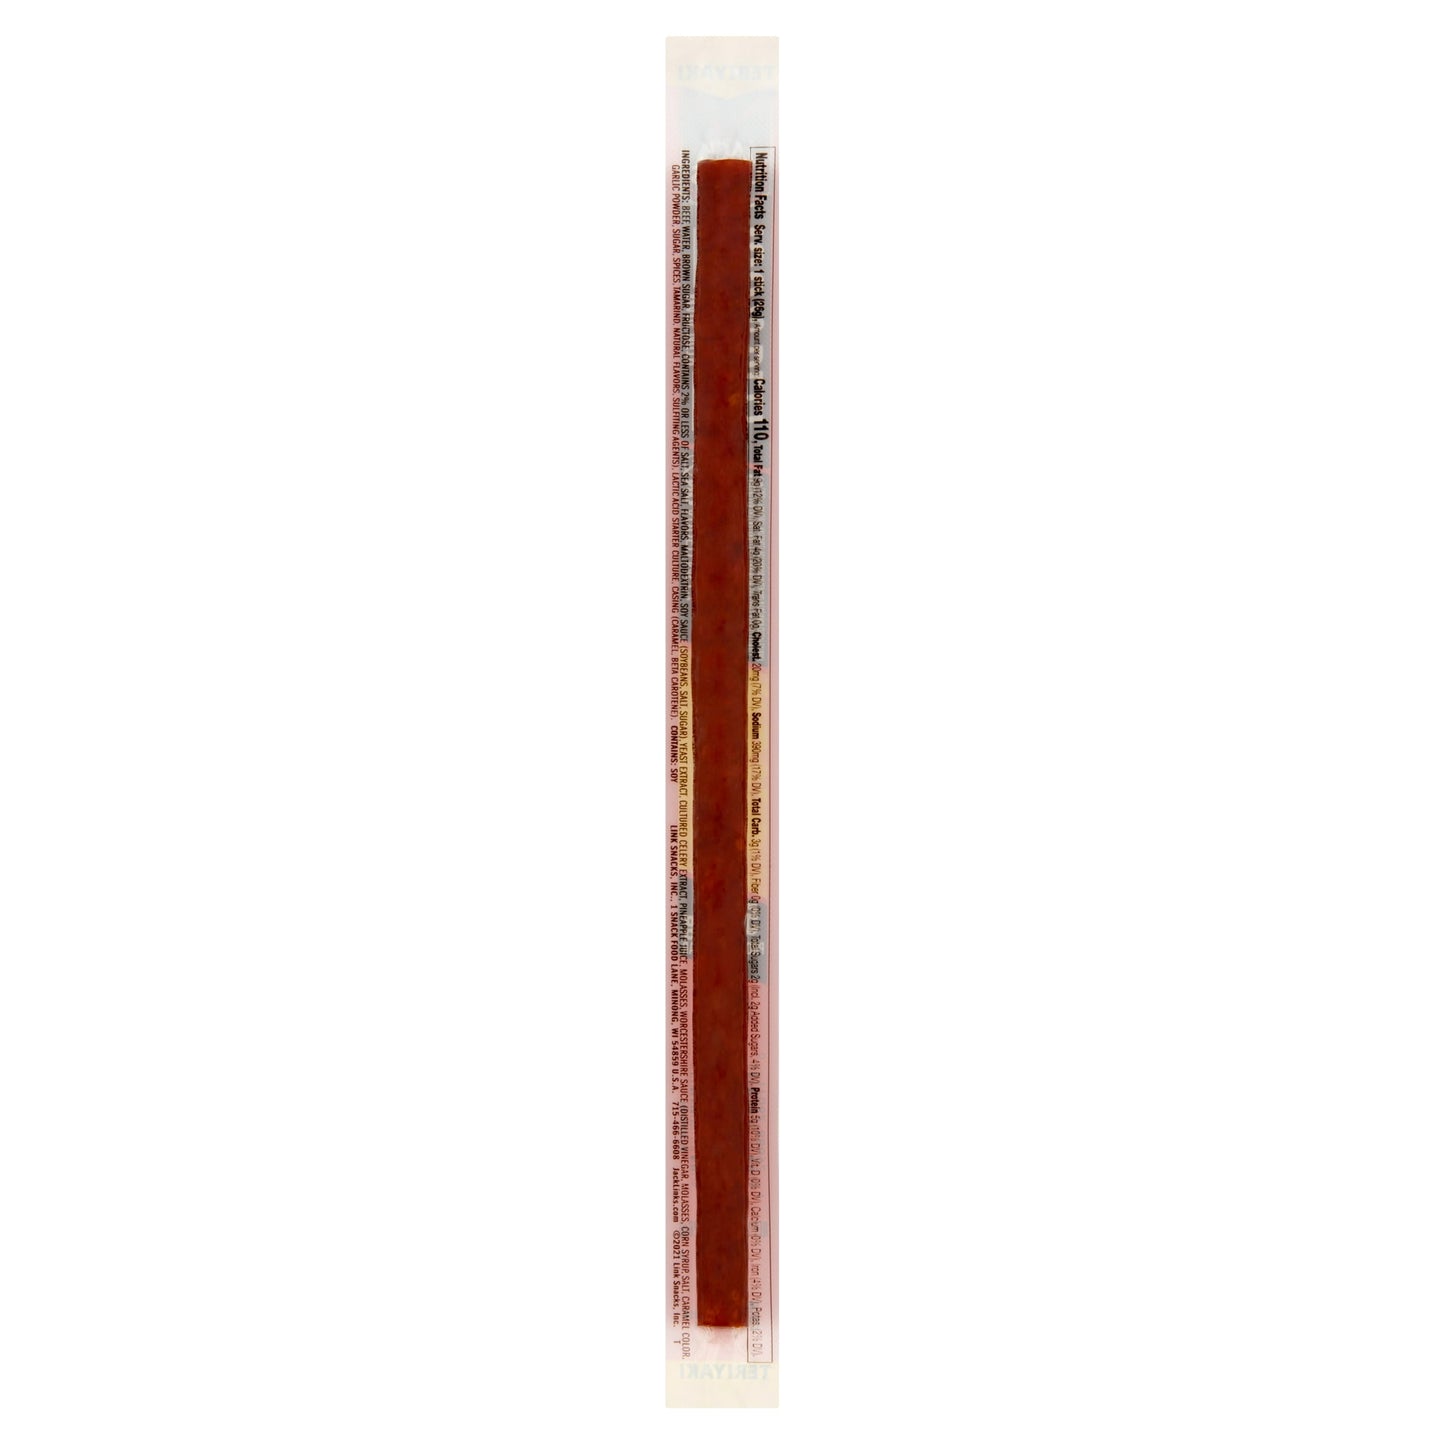 Jack Link's Teriyaki Beef Stick, 0.92 oz